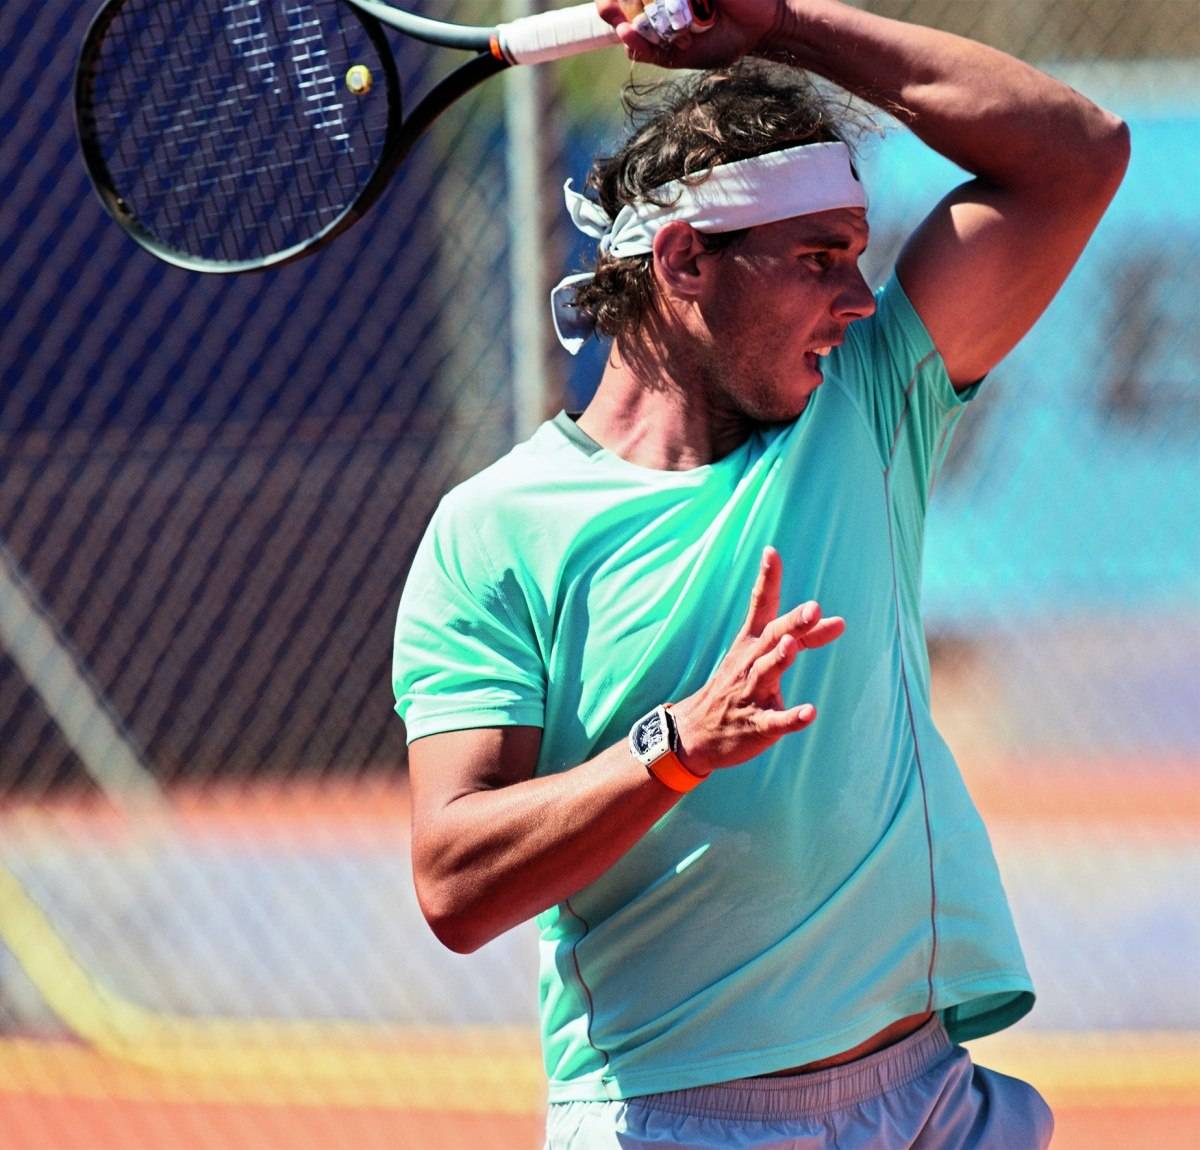 Rafael Nadal Receives New Richard Mille Watch For Roland-Garros 2015